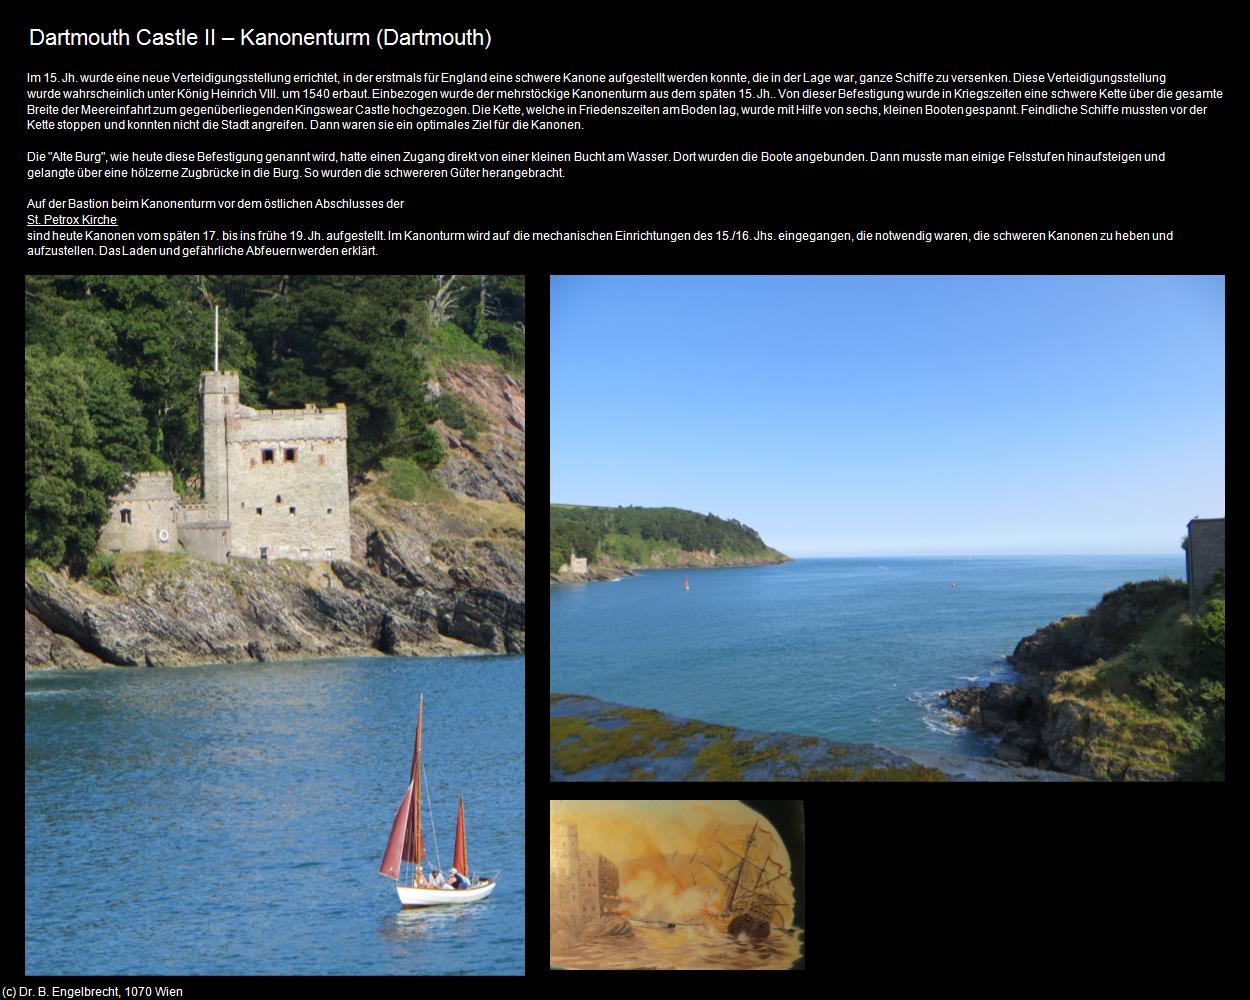 Dartmouth Castle II - Kanonenturm  (Dartmouth, England) in Kulturatlas-ENGLAND und WALES(c)B.Engelbrecht